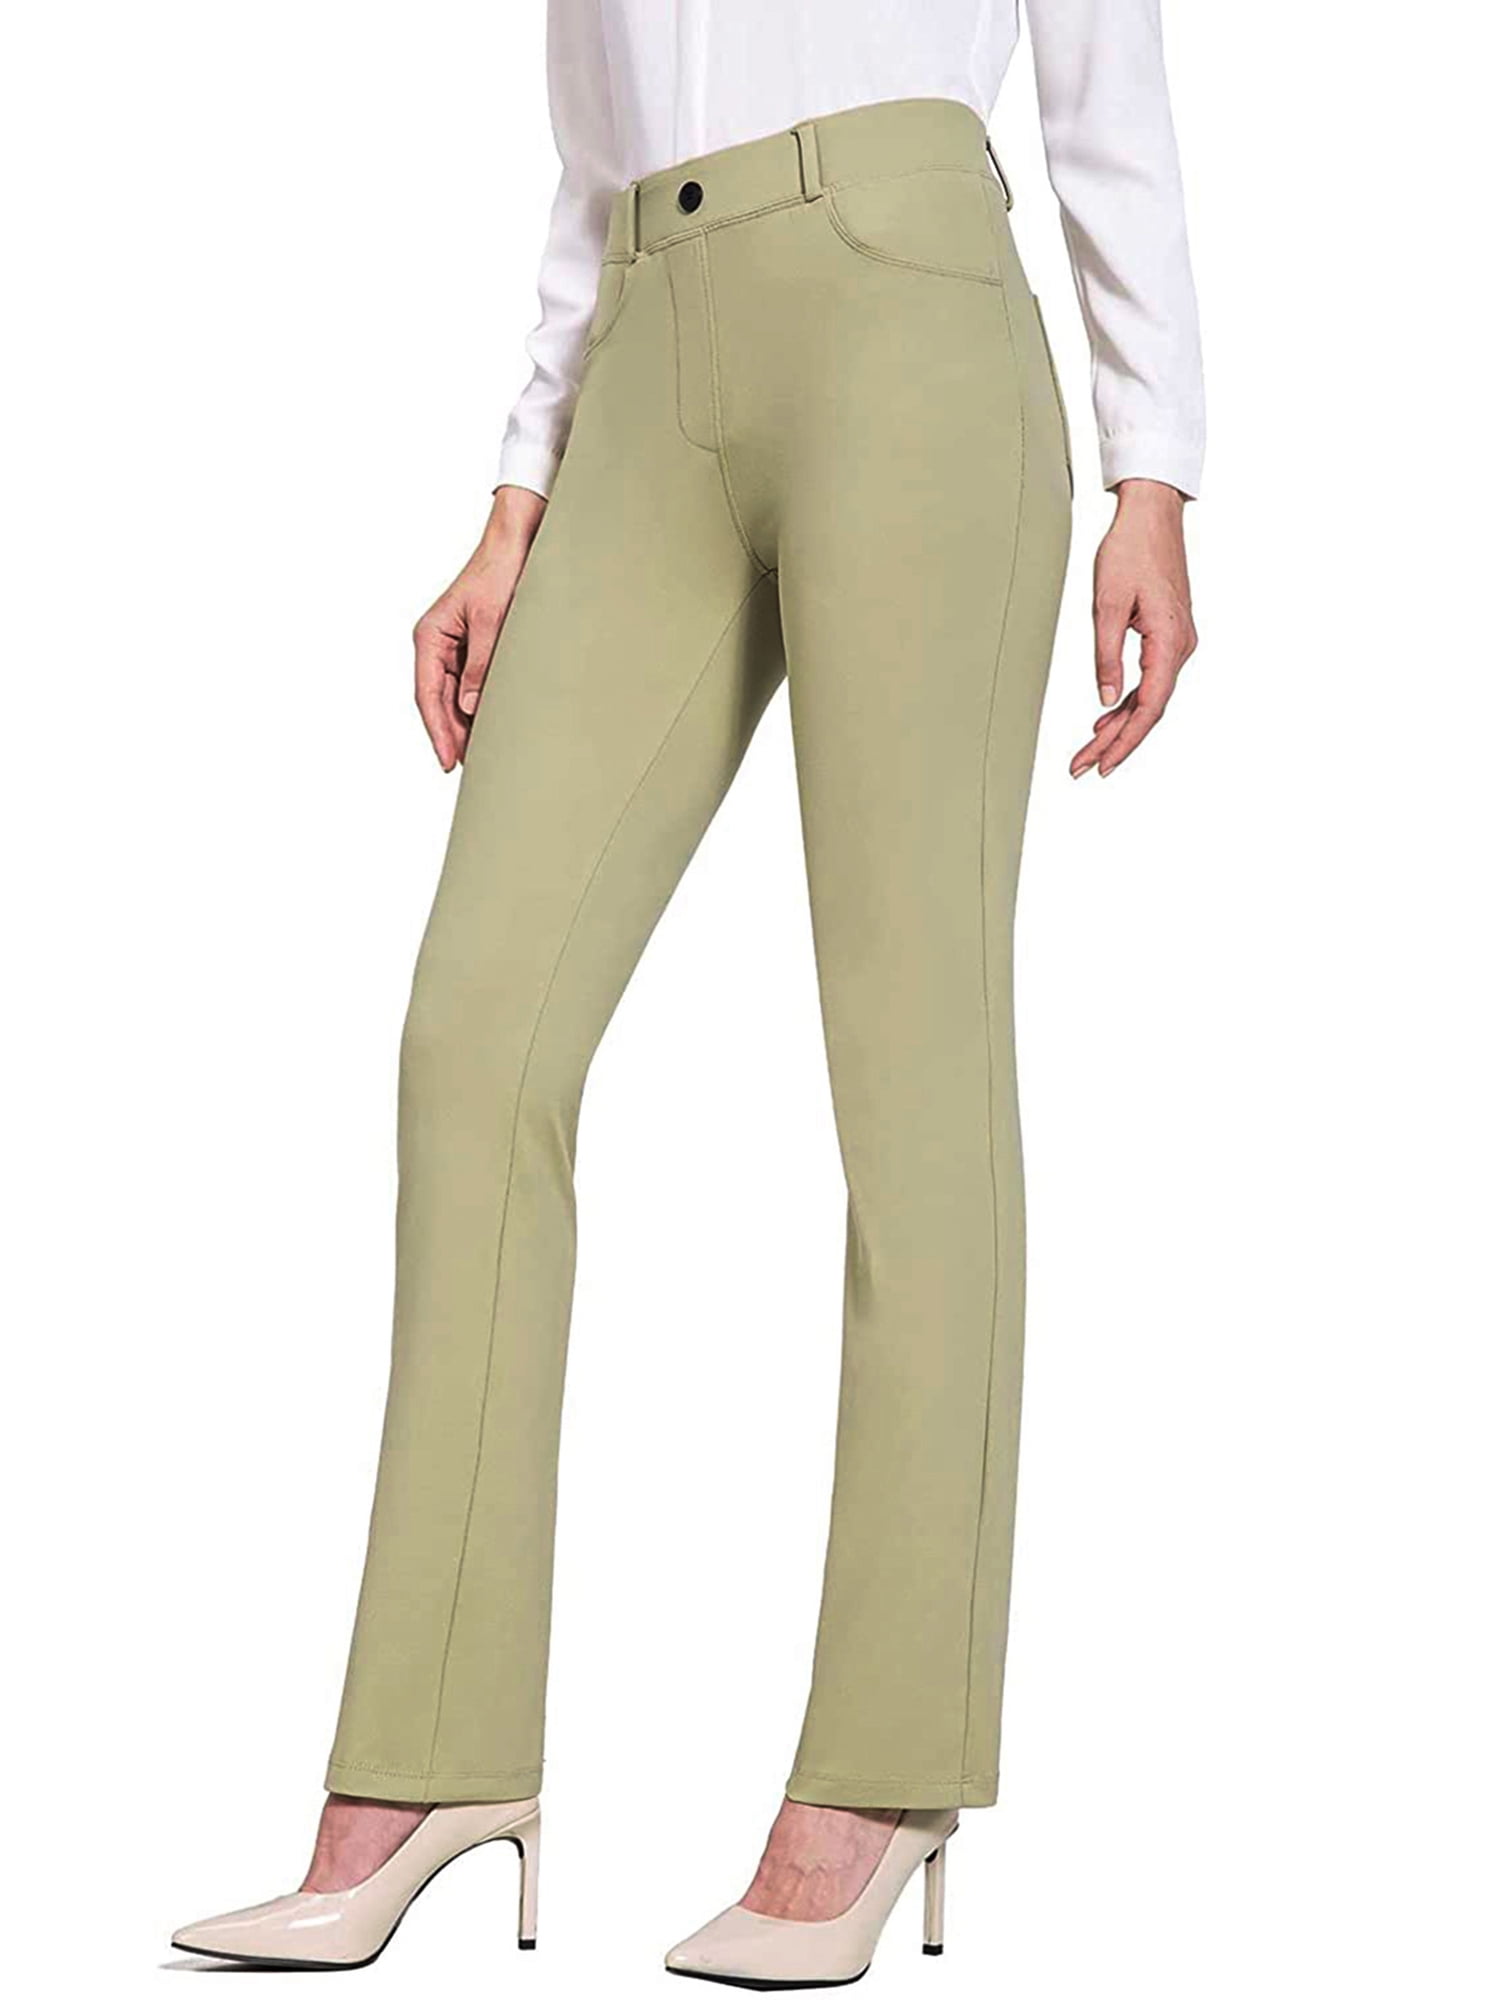 High-waist Dress Pants - Dark beige - Ladies | H&M US